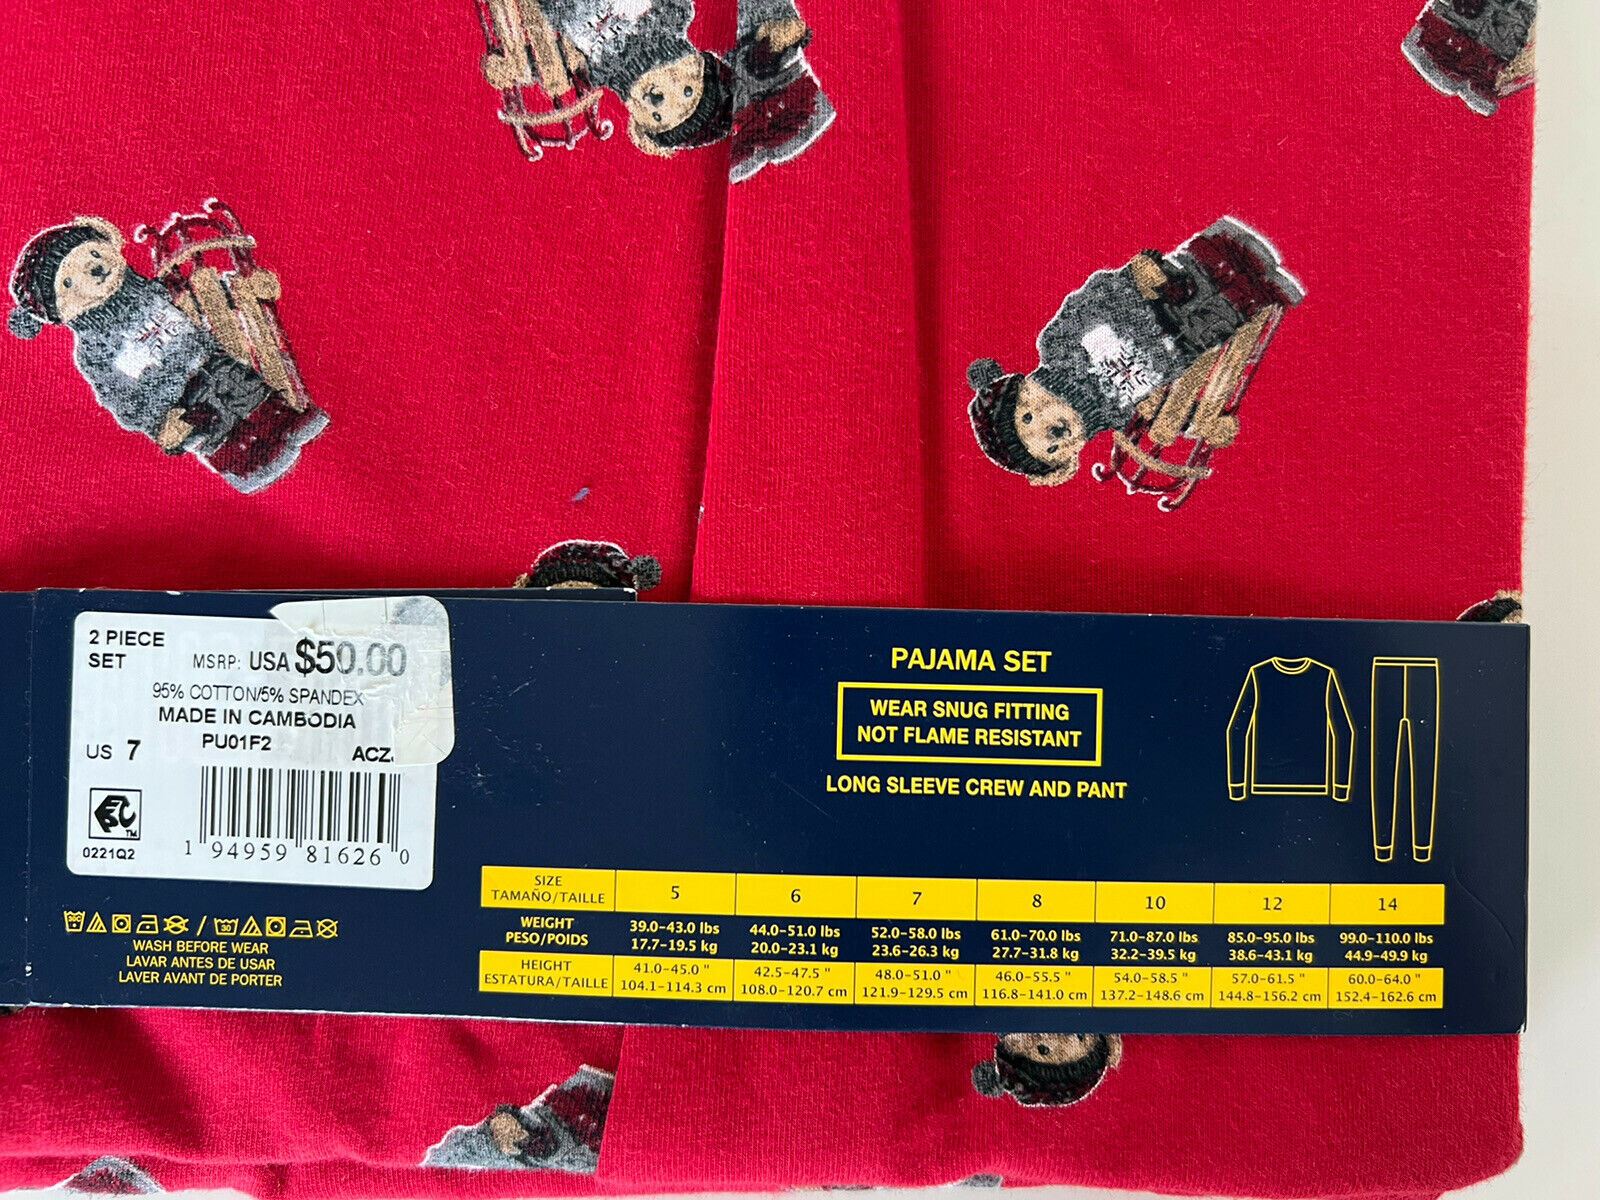 Neu mit Etikett: 50 $ Polo Ralph Lauren Bear Jungen-Pyjama-Set in Rot, 7 US